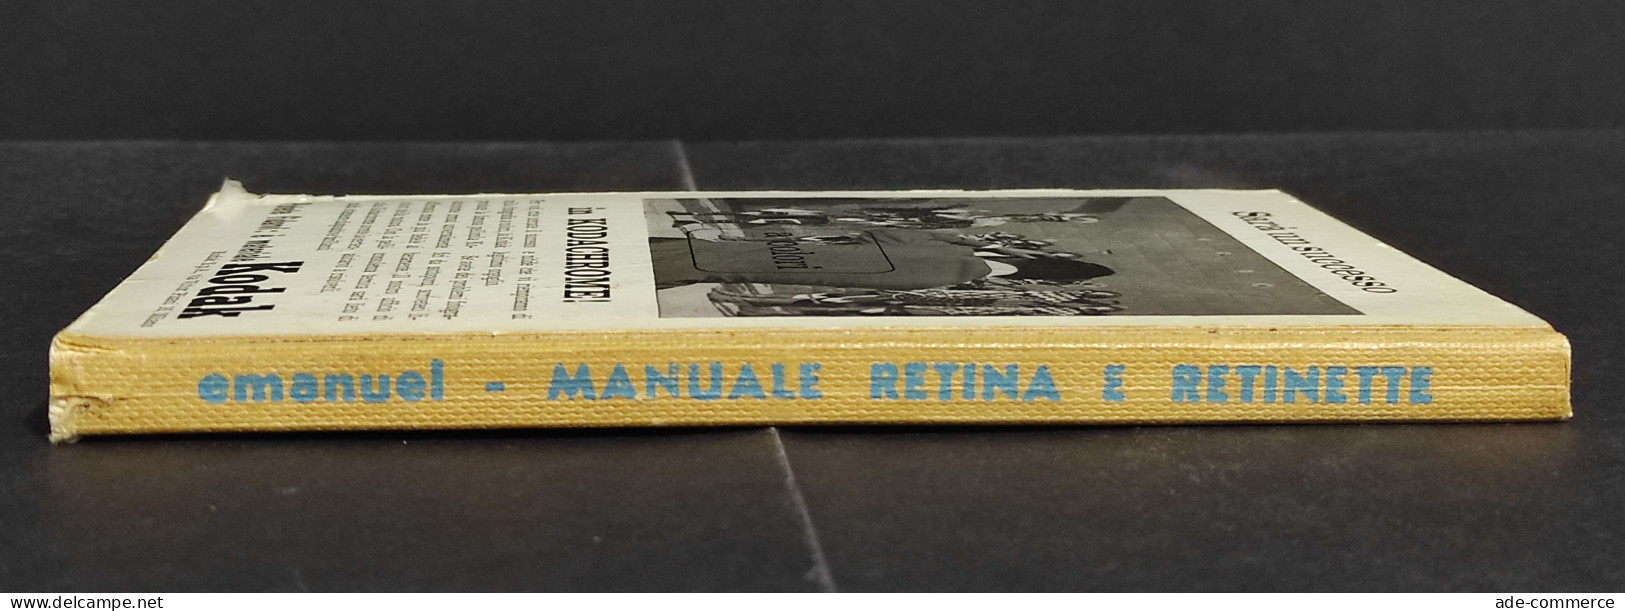 Manuale Retina E Retinette - W. D. Emanuel - Ed. Del Castello - 1956 - Collectors Manuals